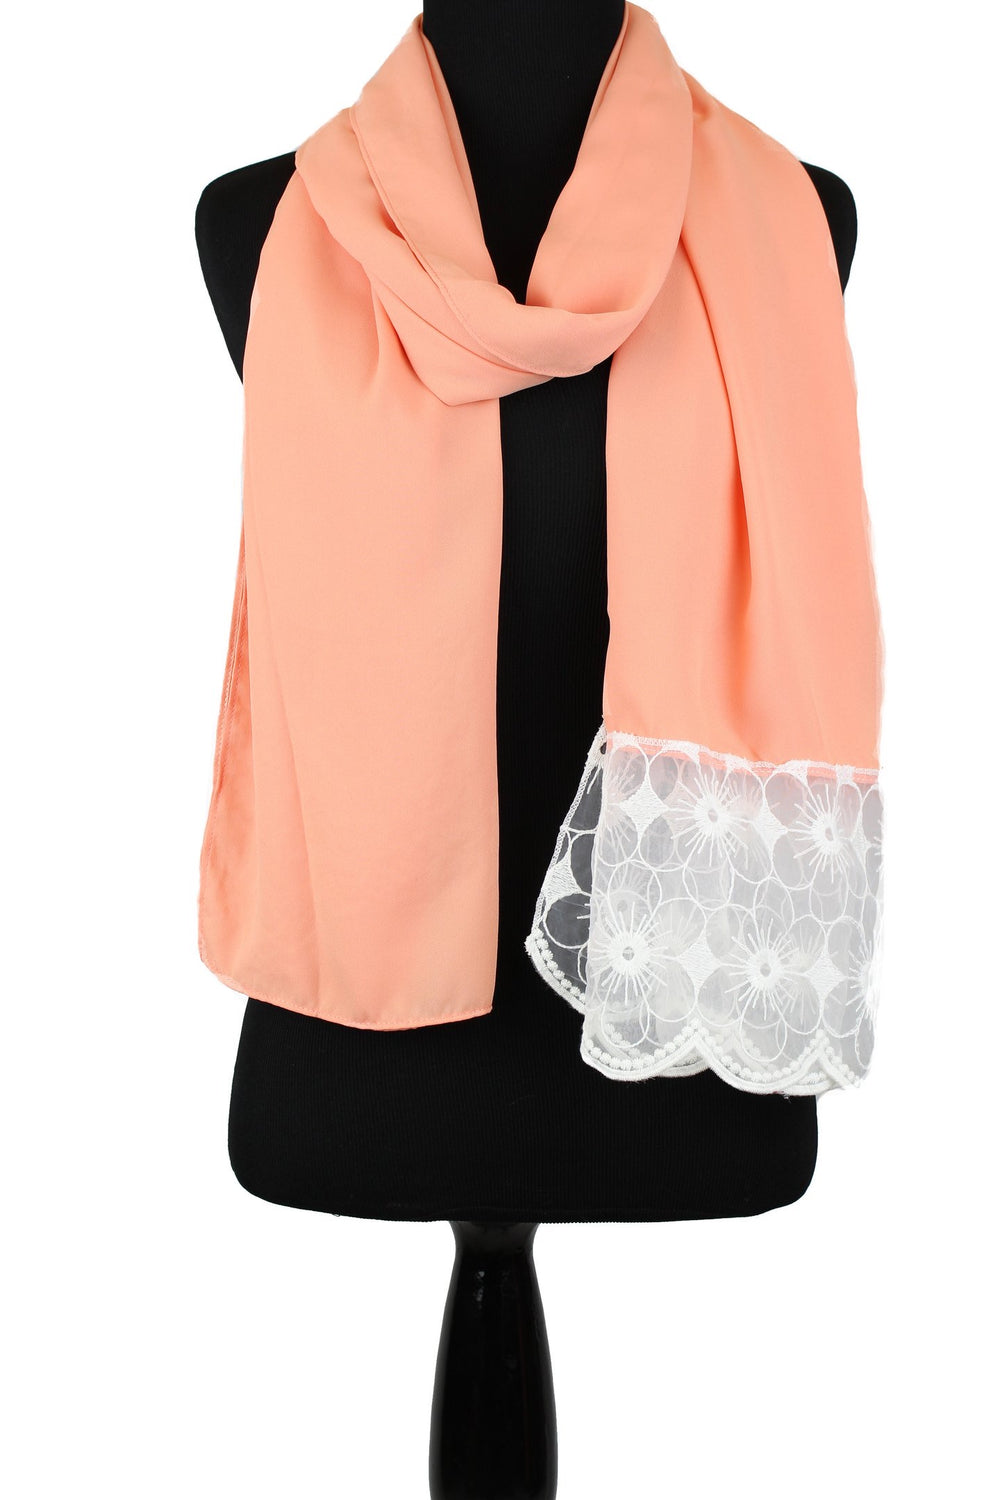 lace georgette hijab in salmon  pink